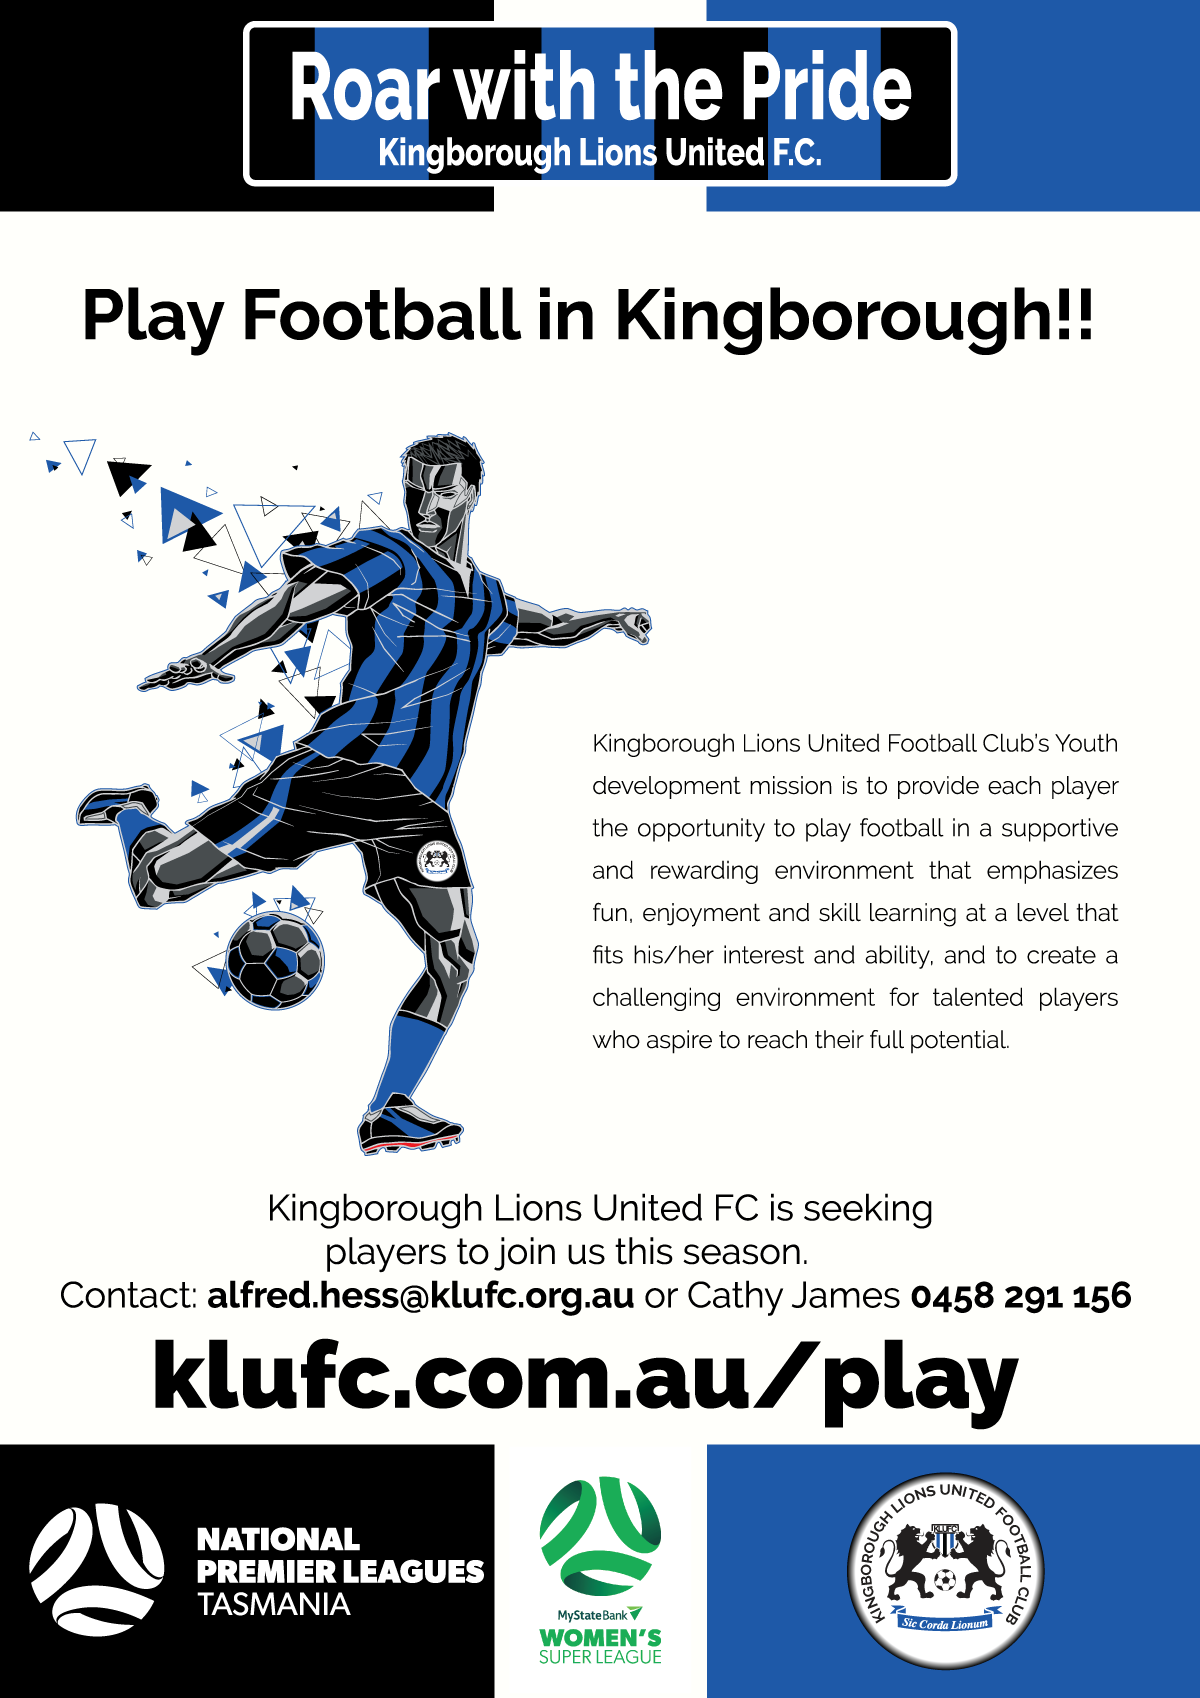 Play Football in Kingborough